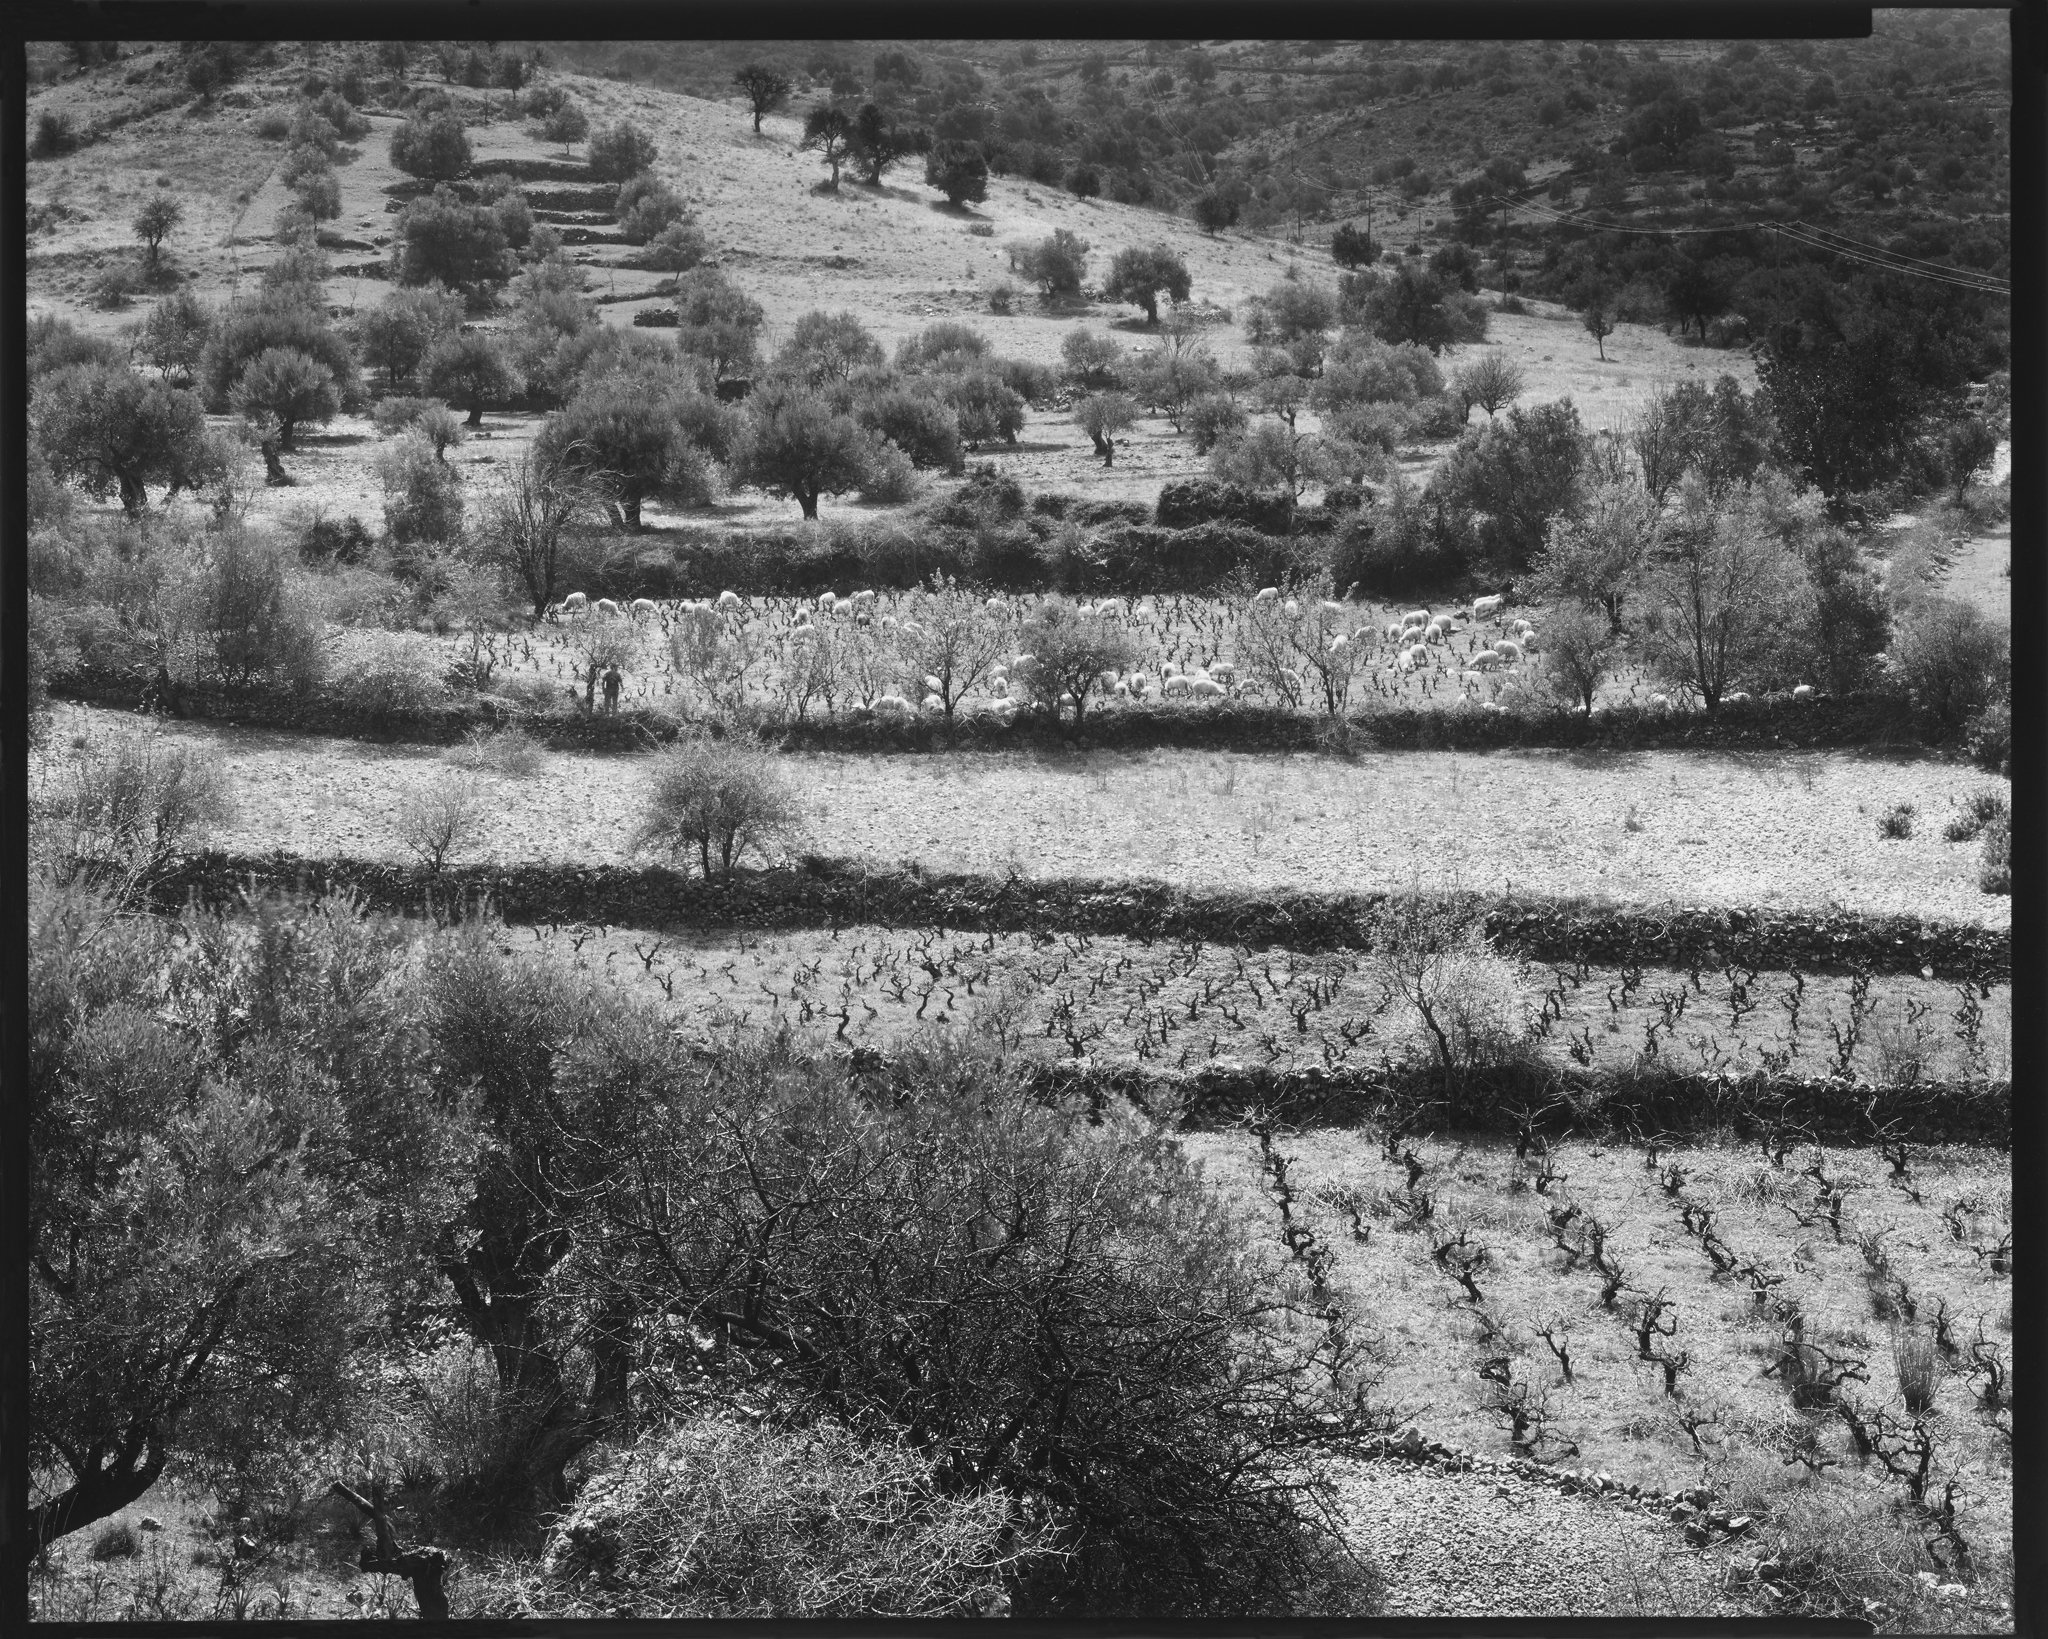 Greek Landscapes Portfolio_Fields with Goats and Vines, Vrises, Crete_1982 © Nick Merrick.jpg